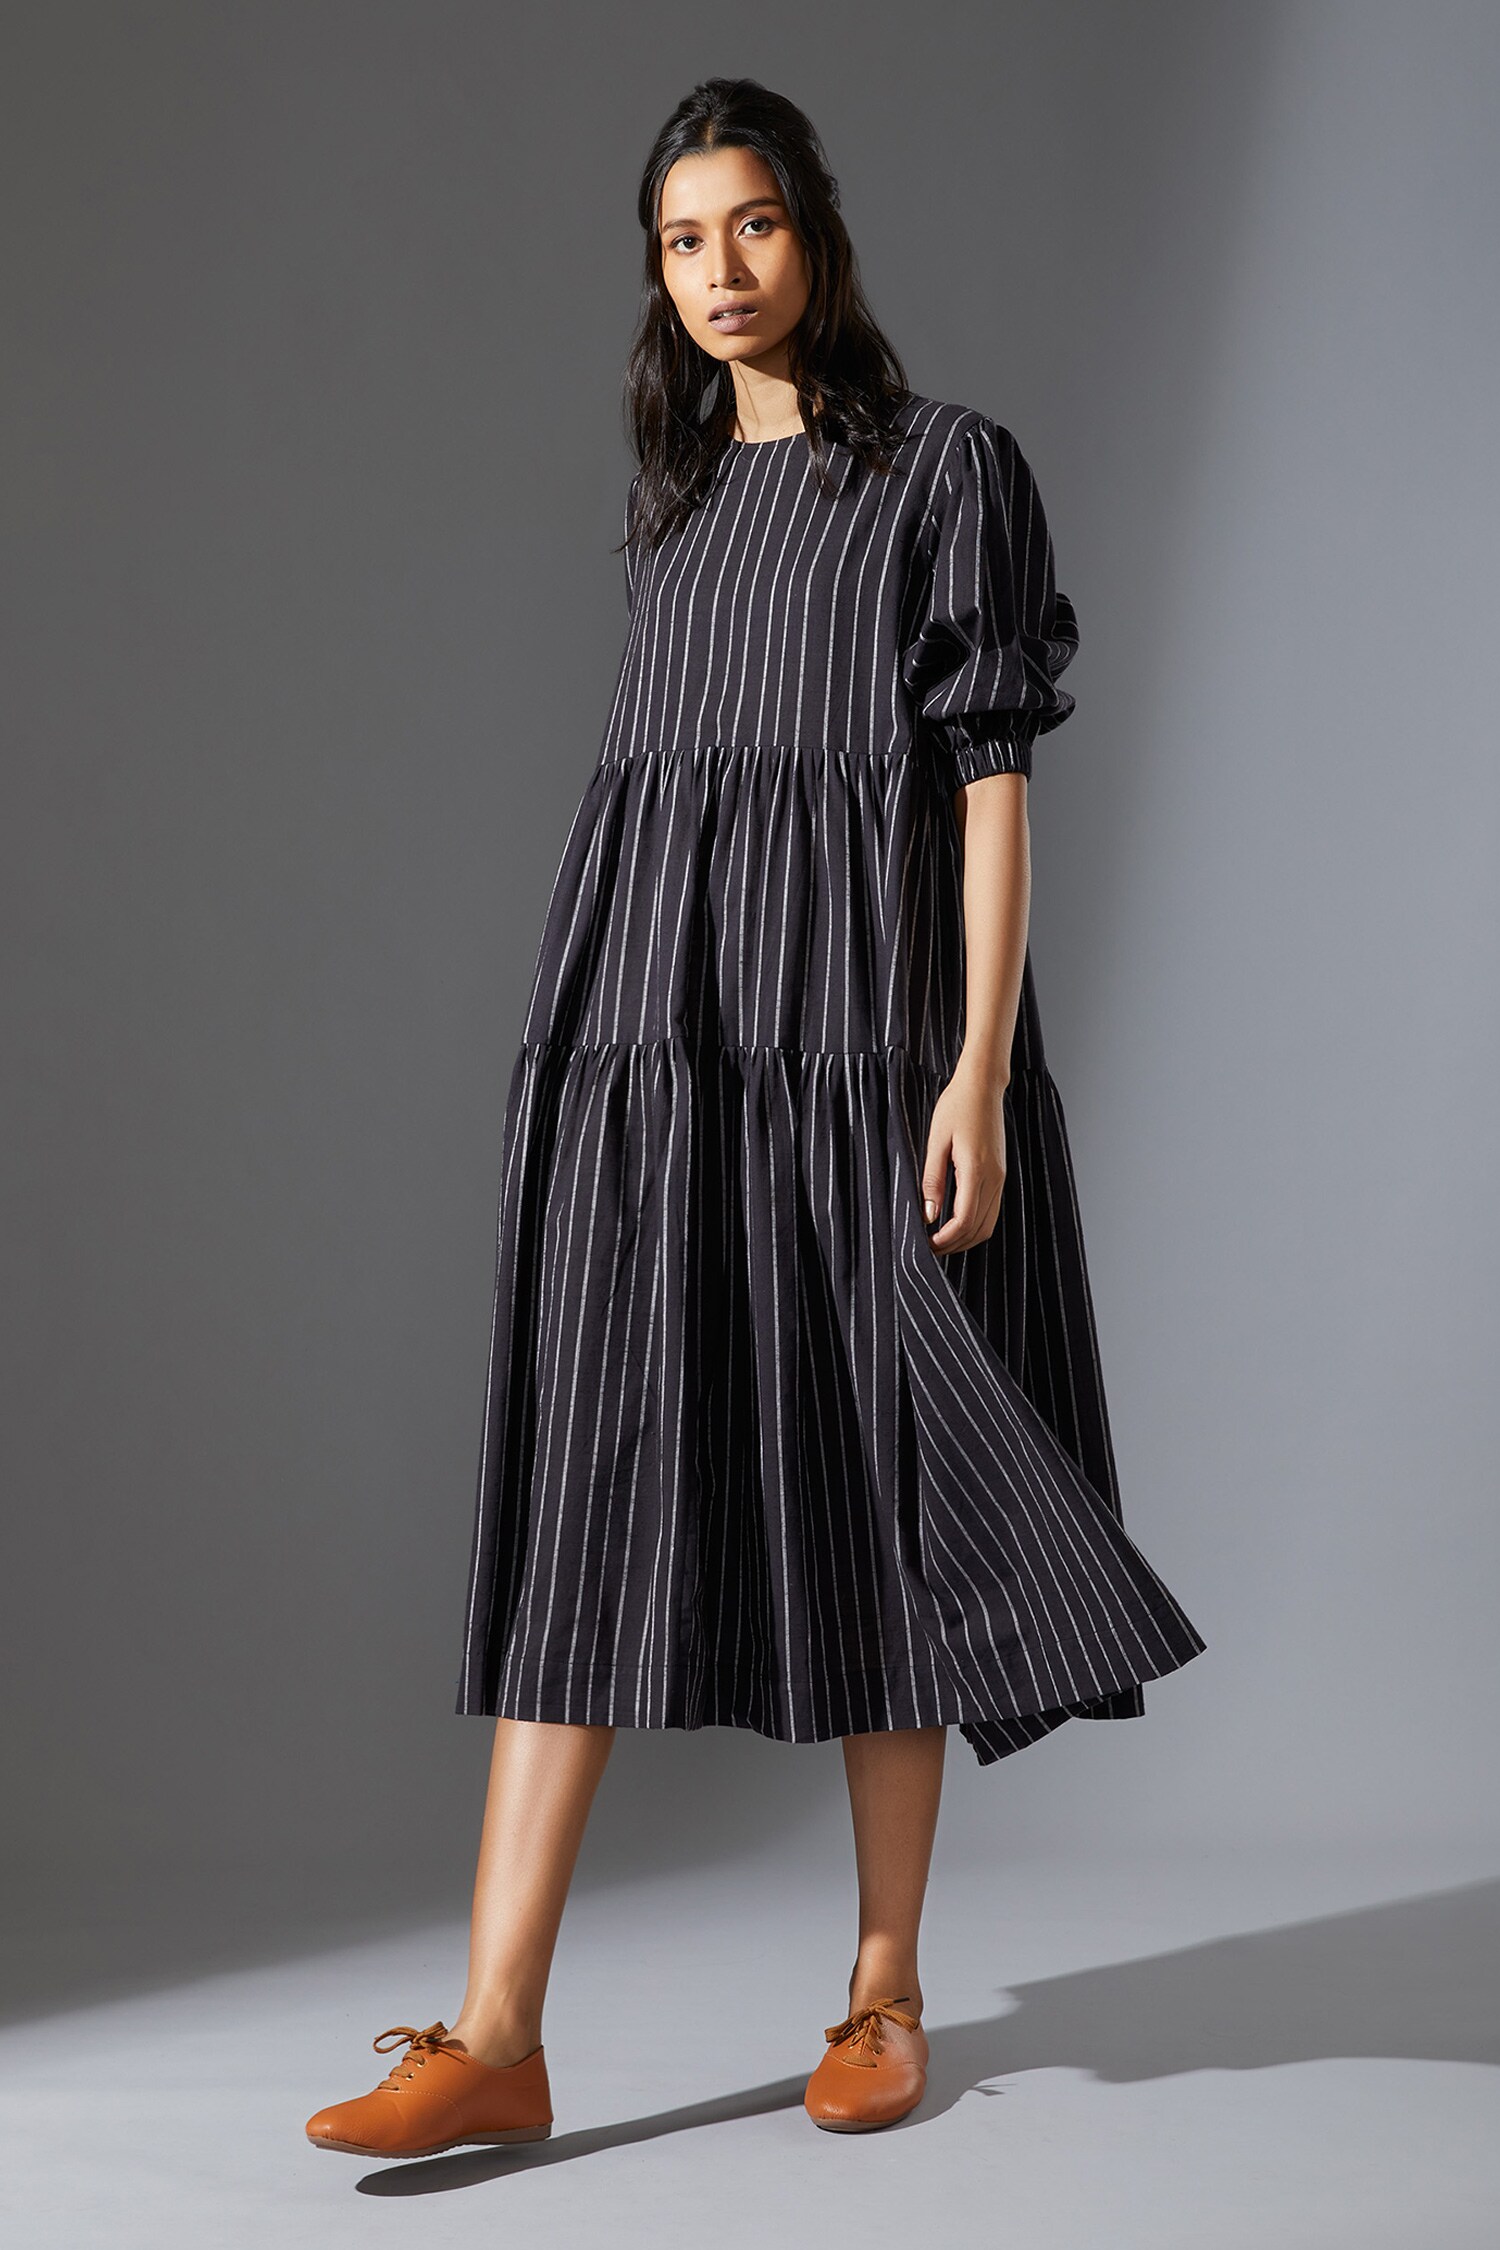 Vero Moda striped high neck midi dress in brown and black | ASOS